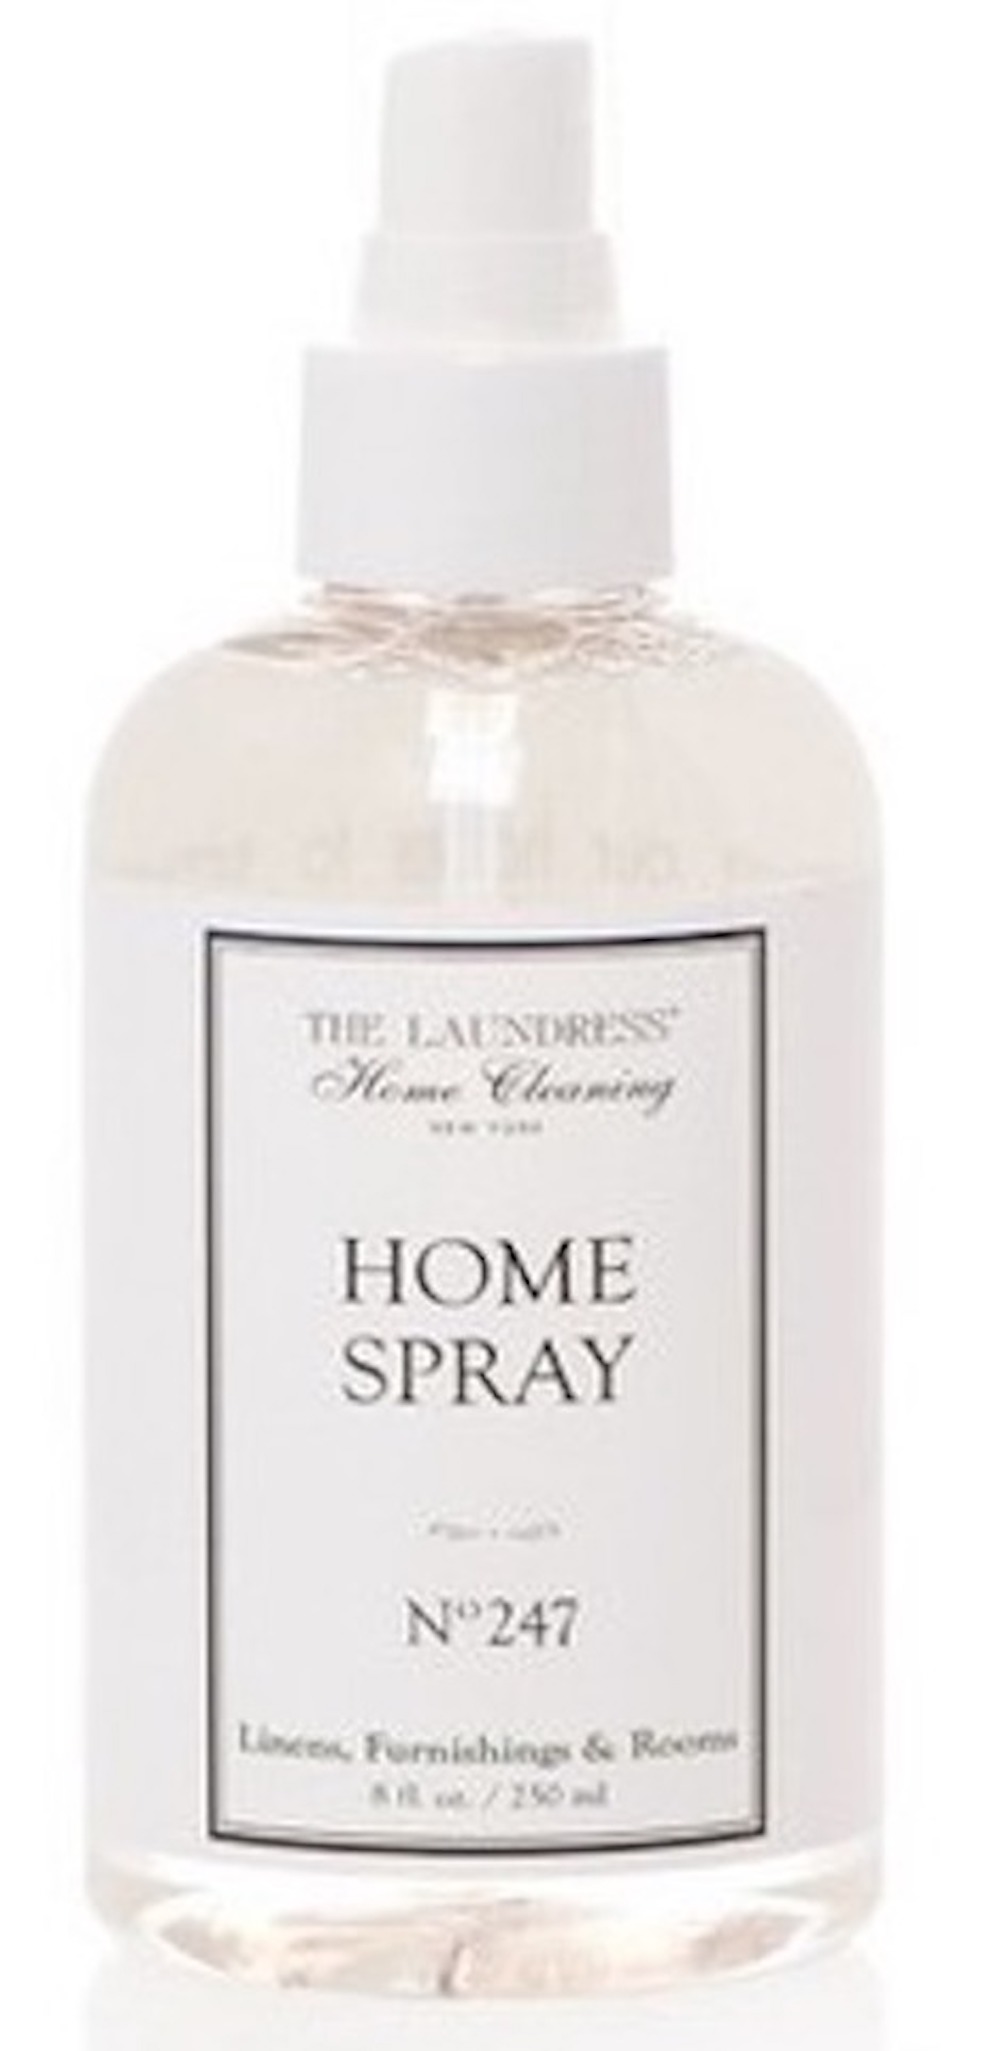 The Laundress home spray